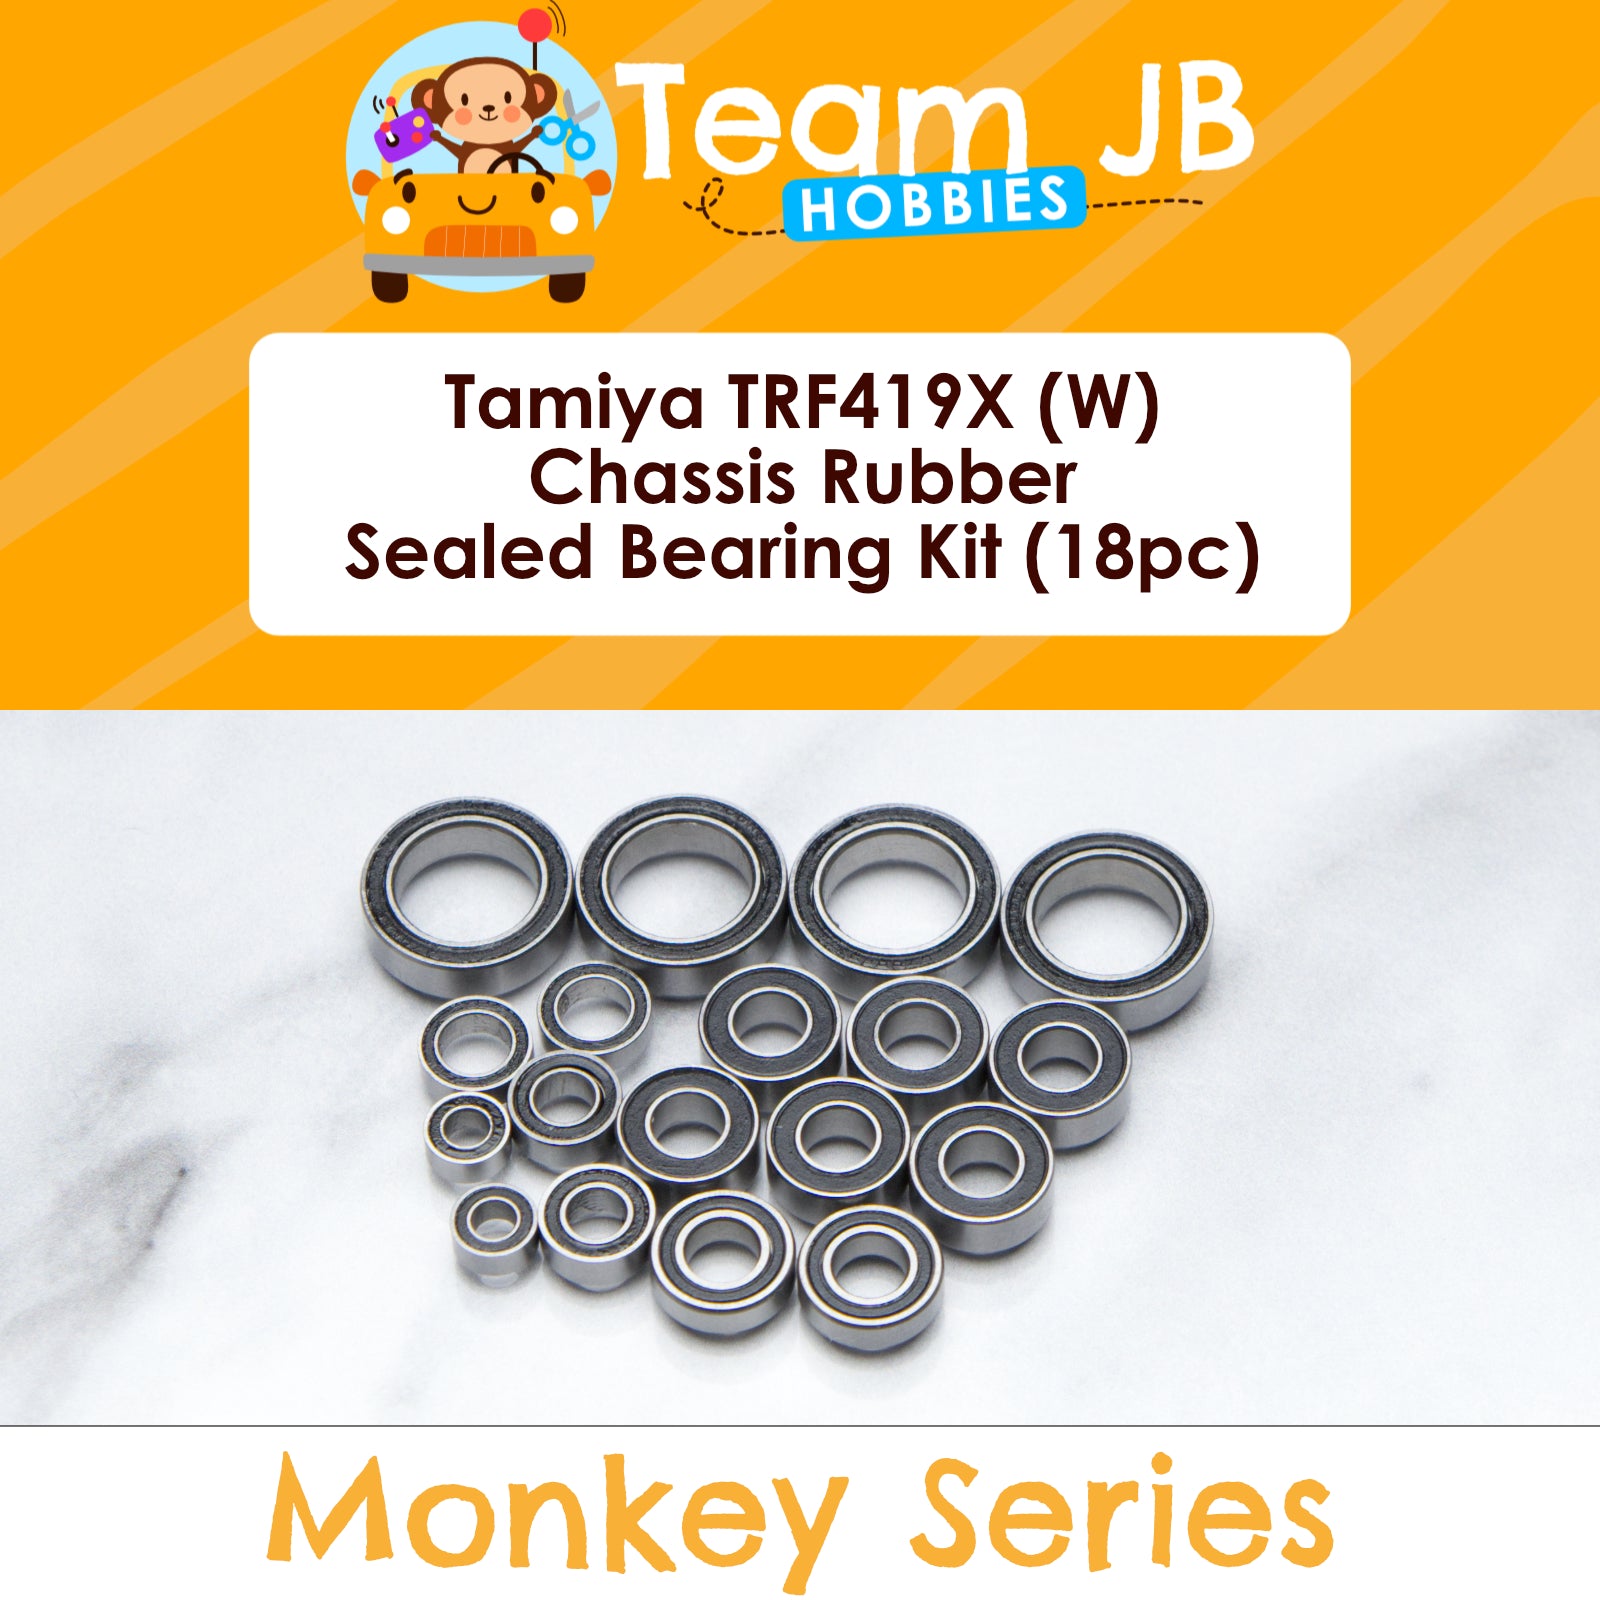 Tamiya TRF419X (W) Chassis Rubber - Sealed Bearing Kit